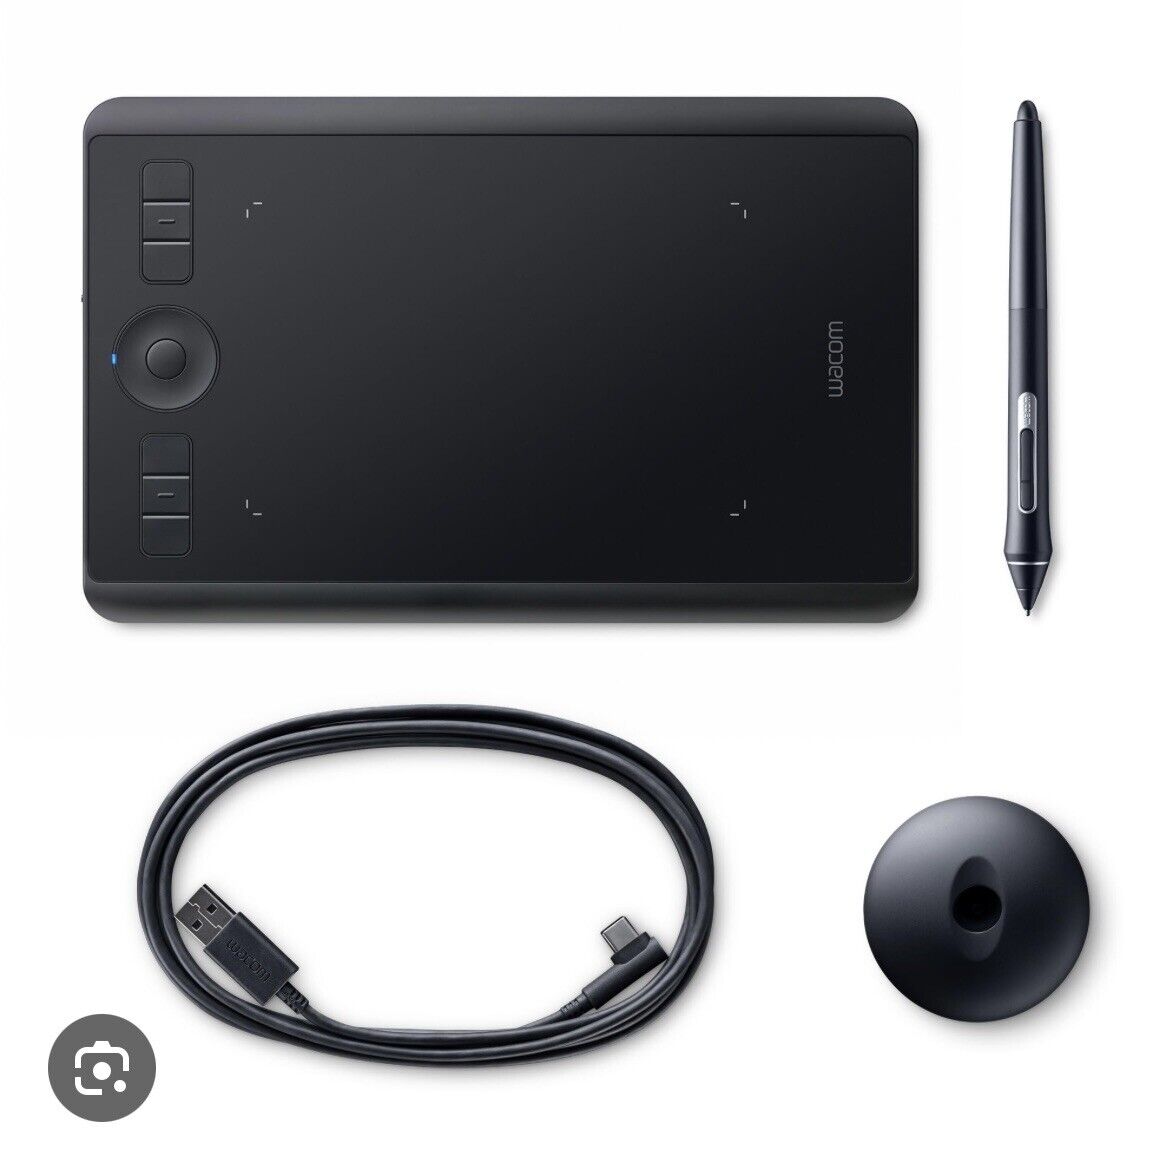 Wacom Intuos Pro Medium Digital Graphic Drawing Tablet - Black